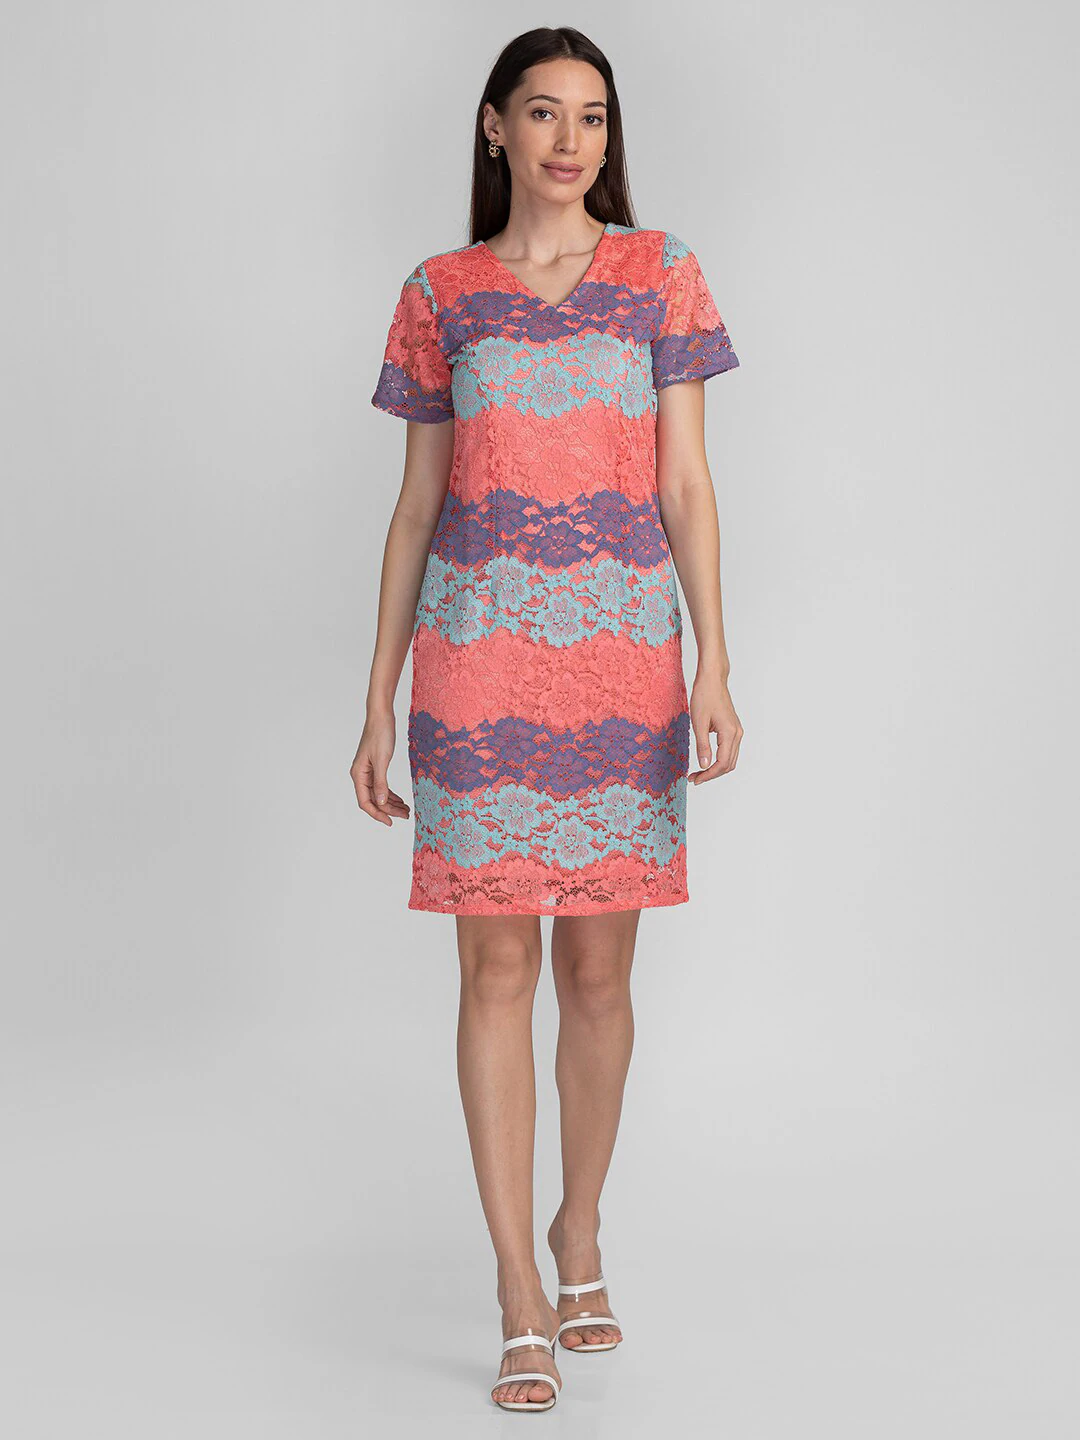 Globus Coral Self Design A-Line Lace Dress